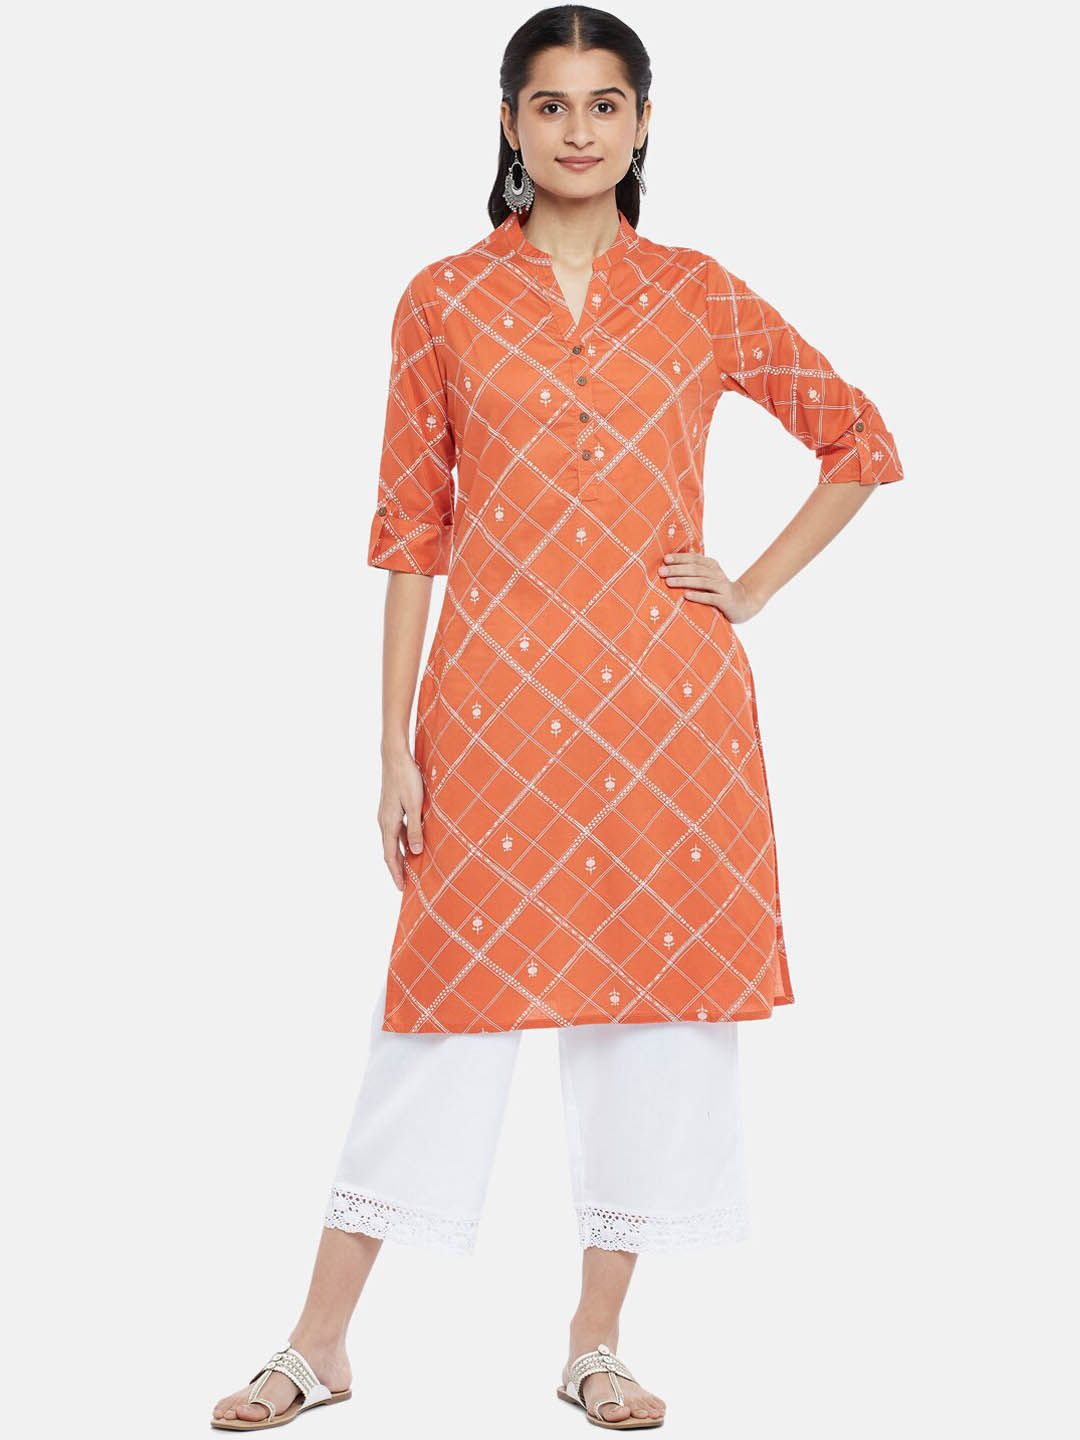 RANGMANCH BY PANTALOONS Women Orange Geometric Checked Cotton Kurta Price in India